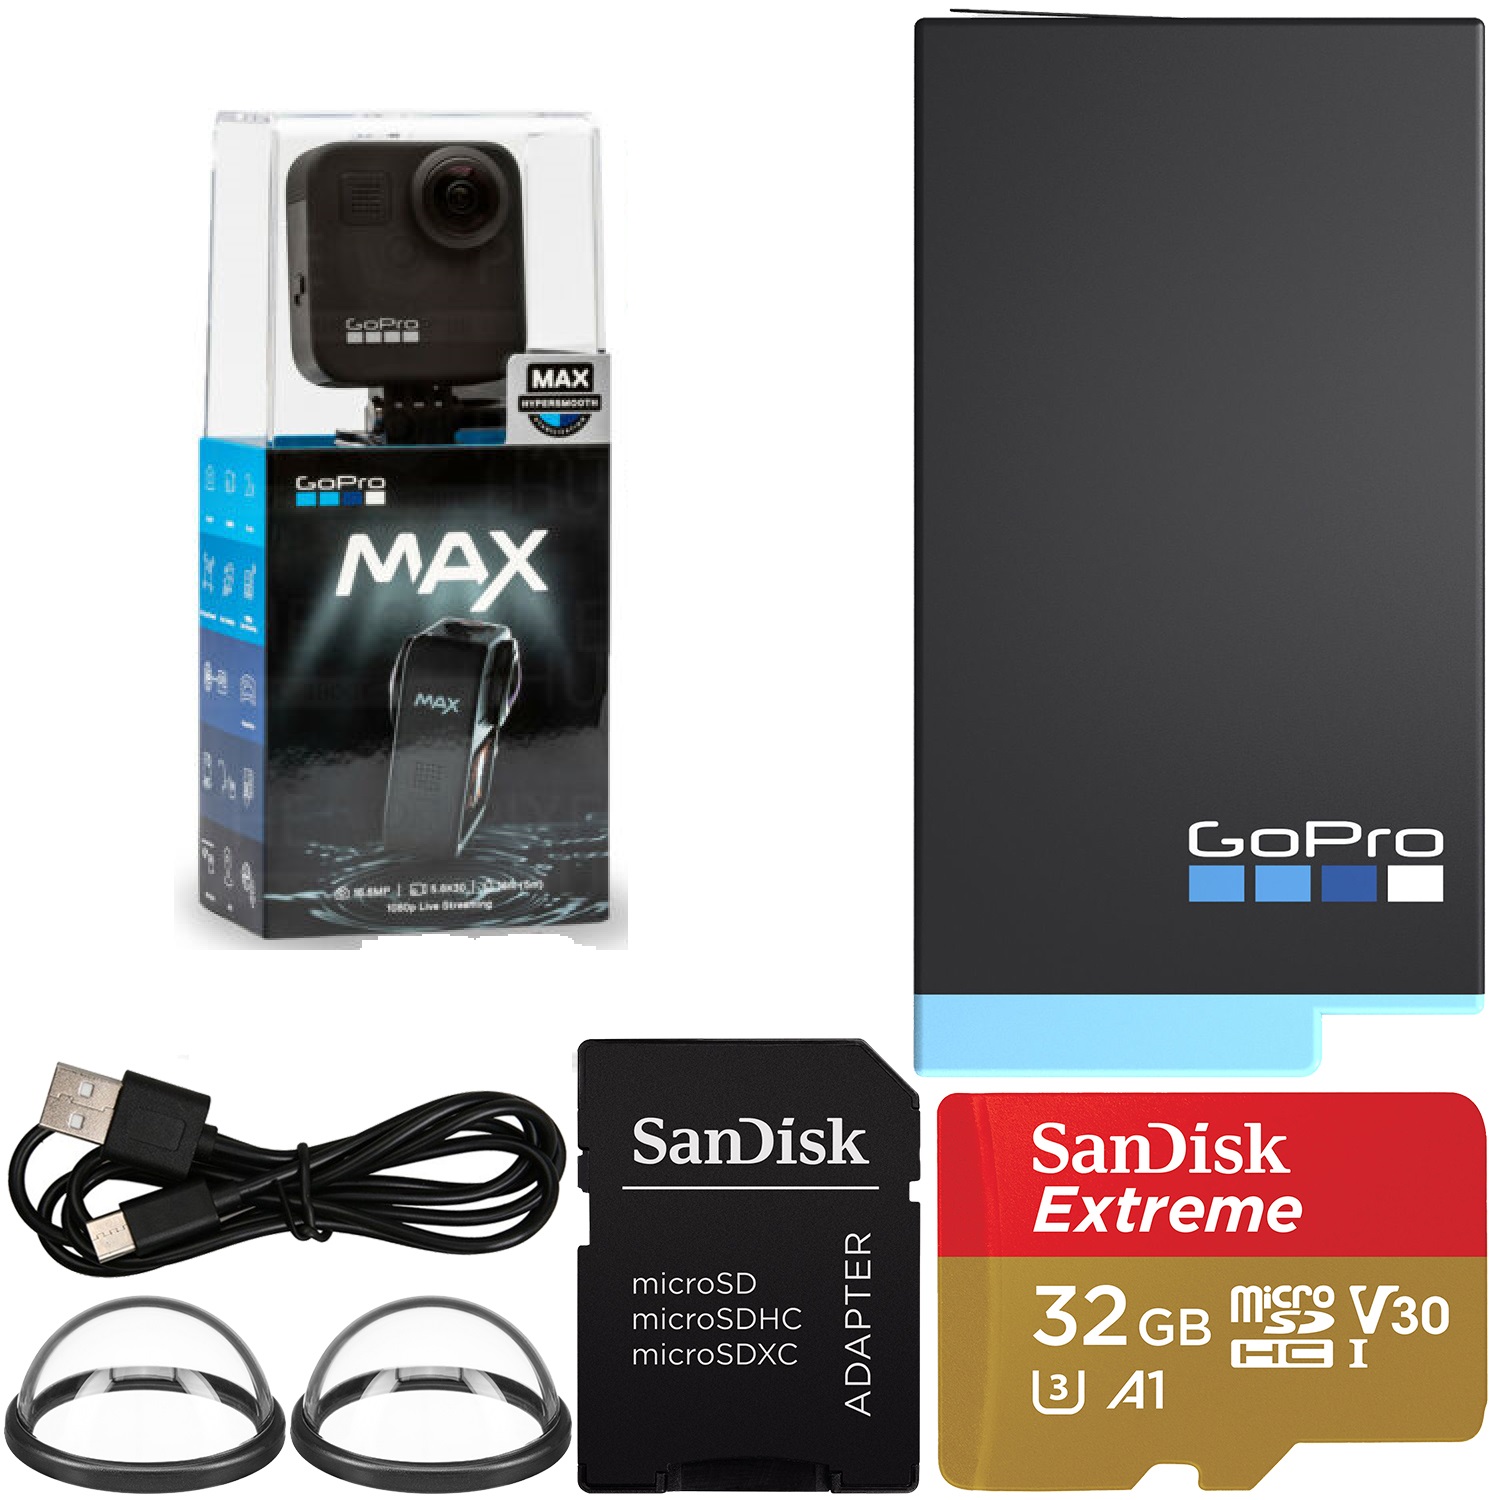 GoPro MAX 360 Action Camera - CHDHZ-201 with SanDisk Extreme 32GB microSDHC Memory Card (UHS-I / V30 / U3 / A1)